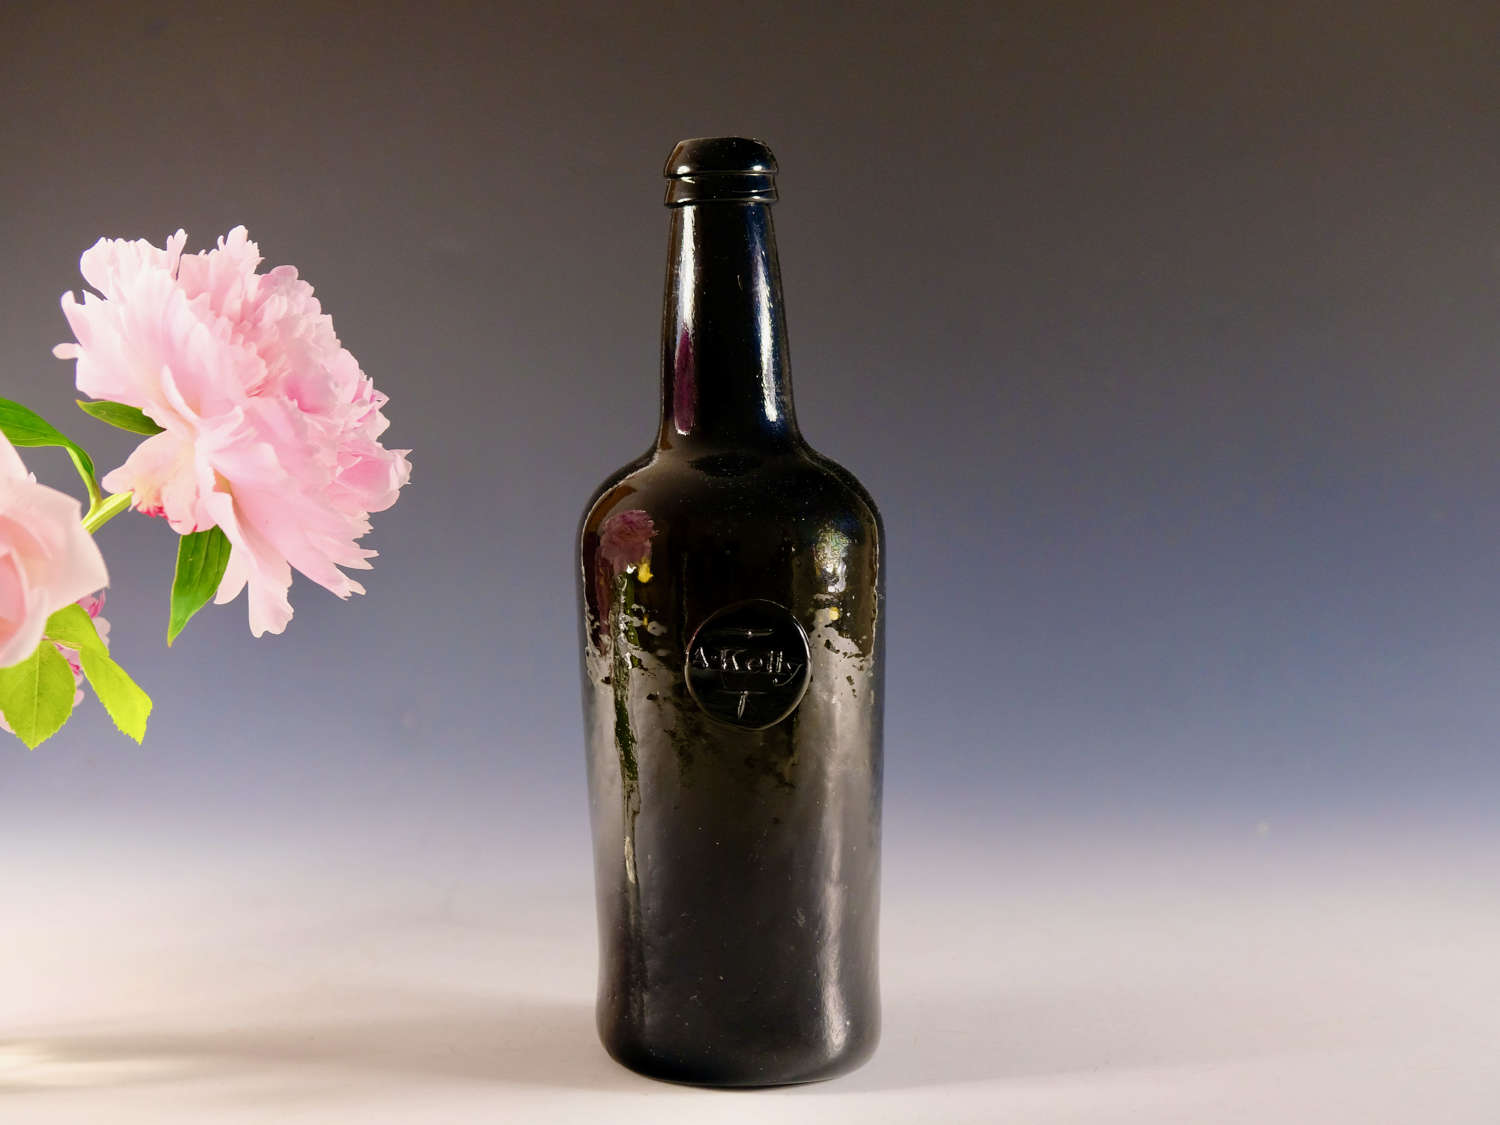 Antique glass - sealed wine bottle A Kelly c1790 - 1800